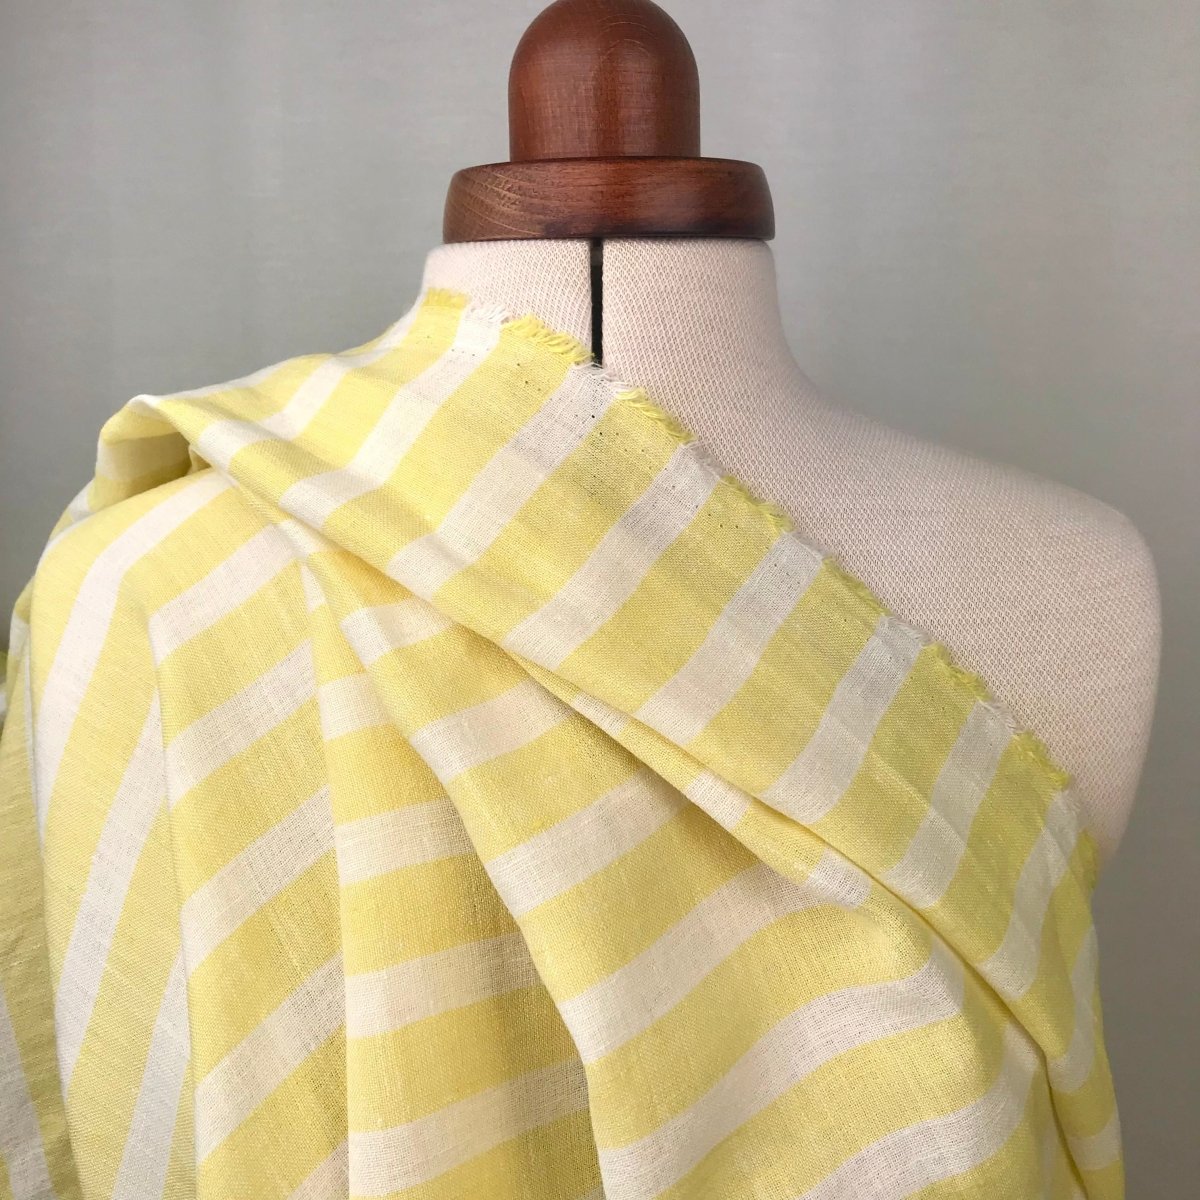 Nagare - 94% Linen 6% Cotton - Yellow Stripe - Sewing Gem